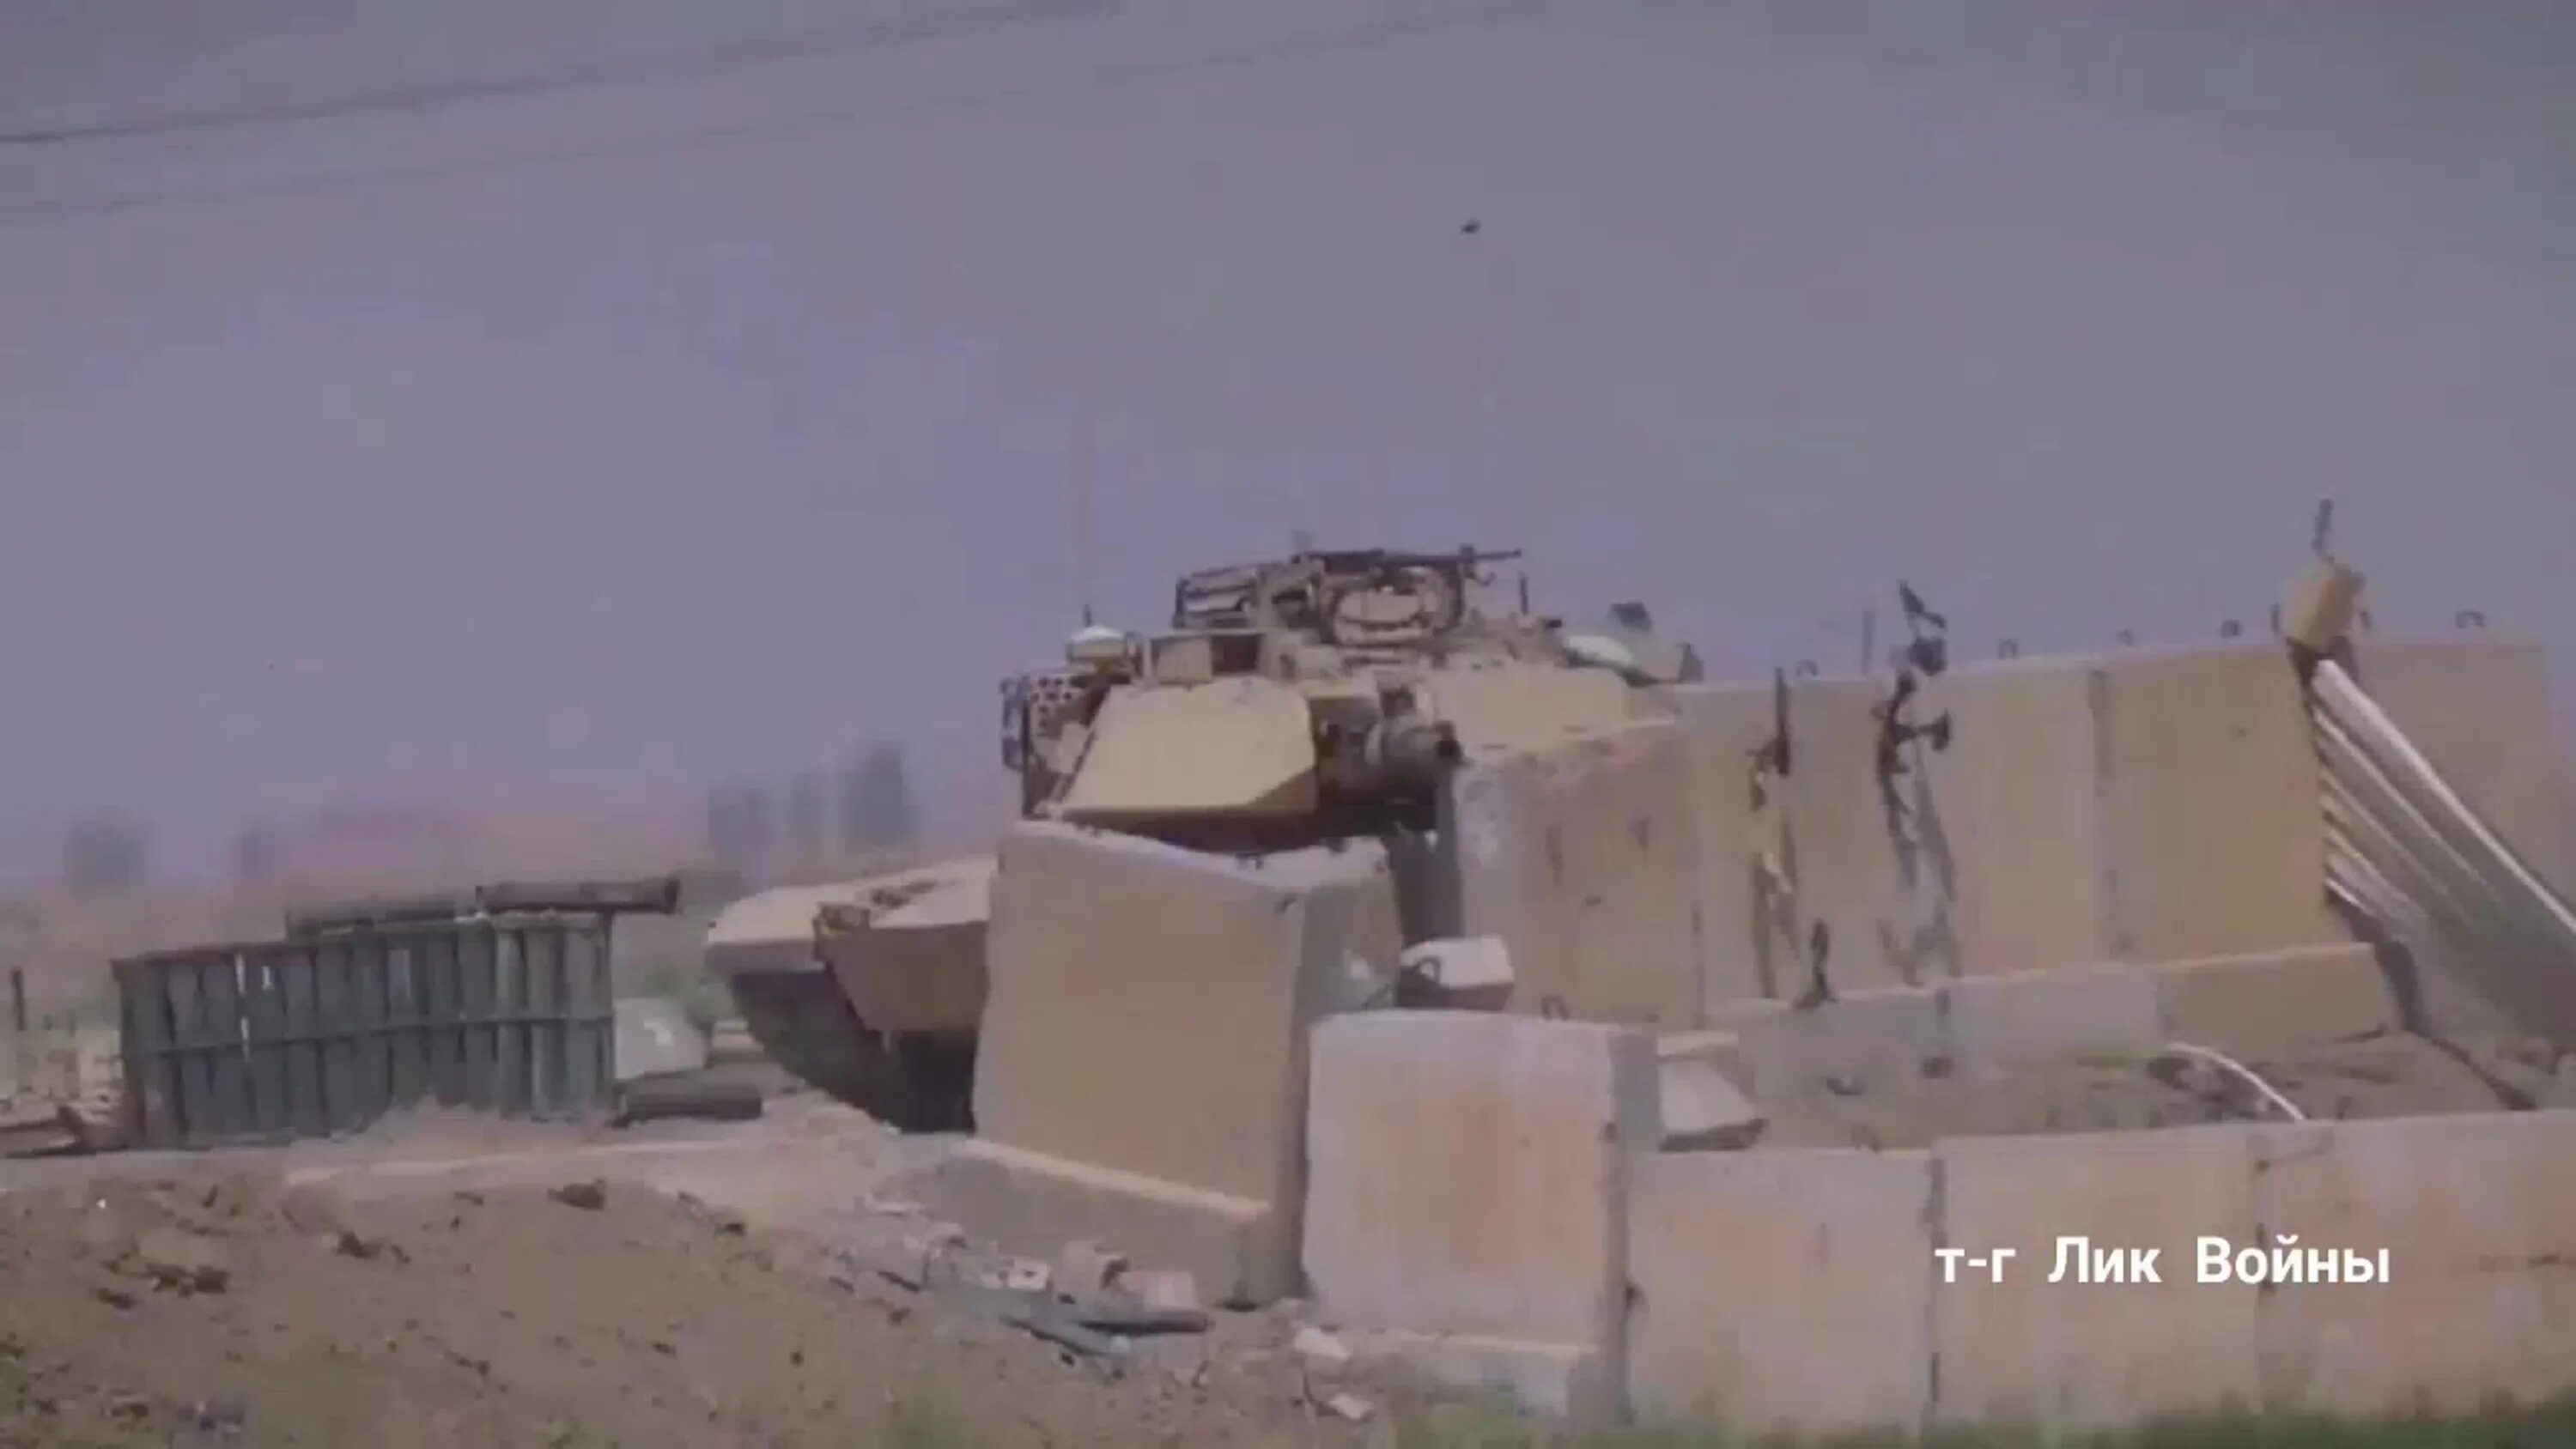 Blow off pannels Abrams Tank destroyed. Лик войны телеграмм без цензуры